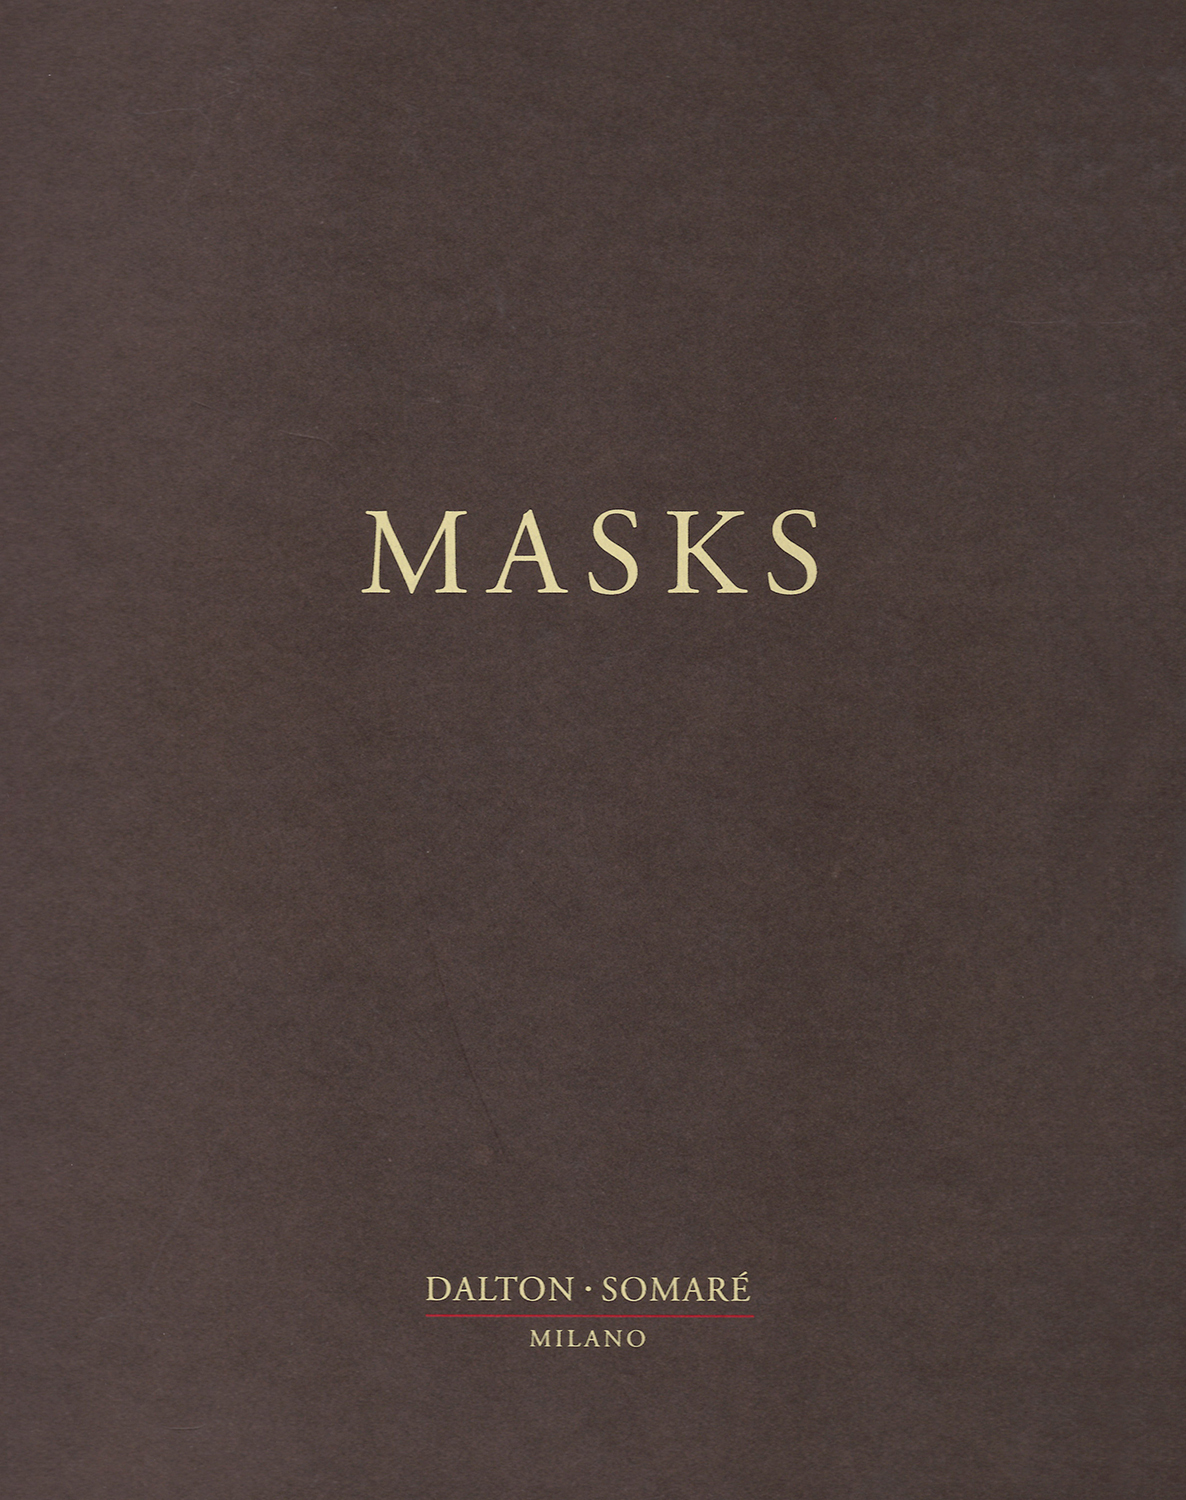 Catalogo Masks a cura della Galleria Dalton Somaré